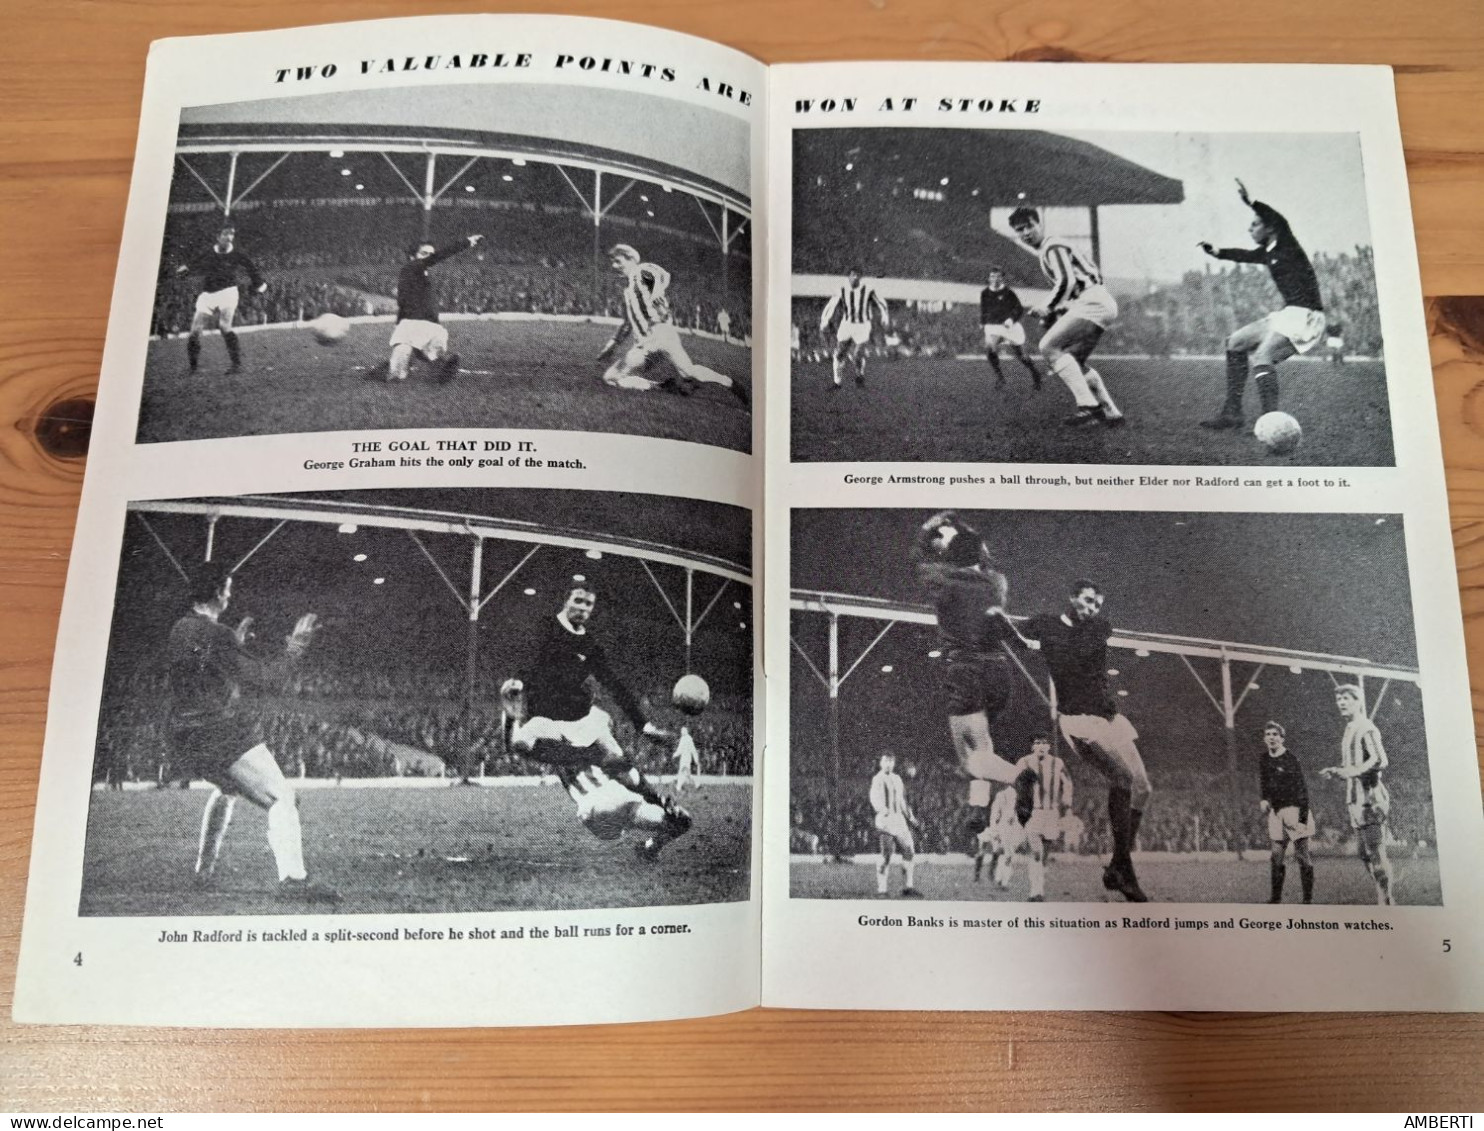 Programa Arsenal Chelsea Temporada 1967/68 - Sport